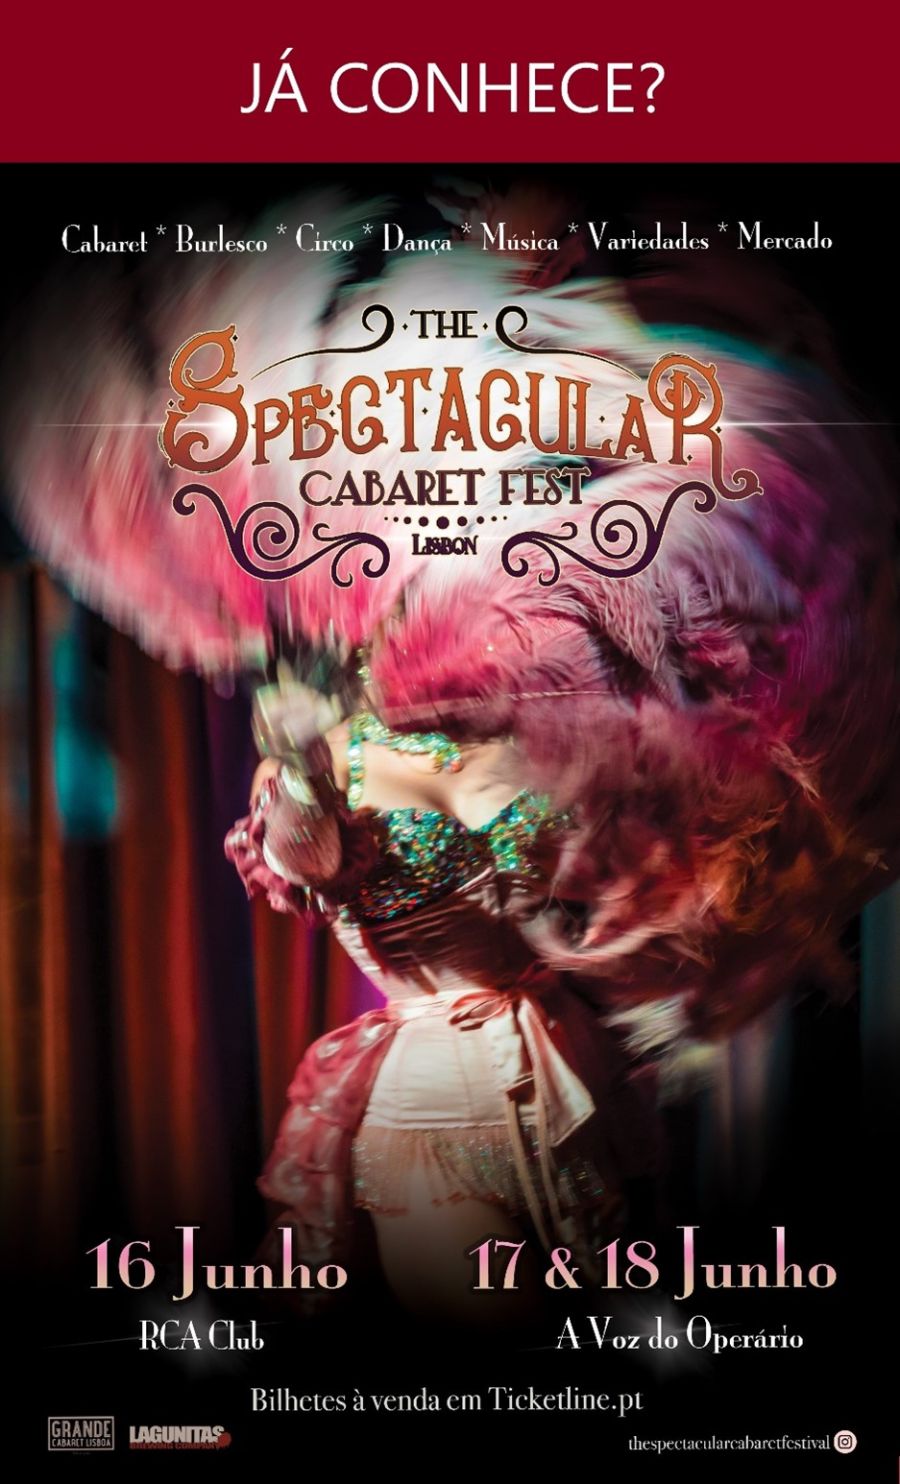 The Spetacular Cabaret Fest